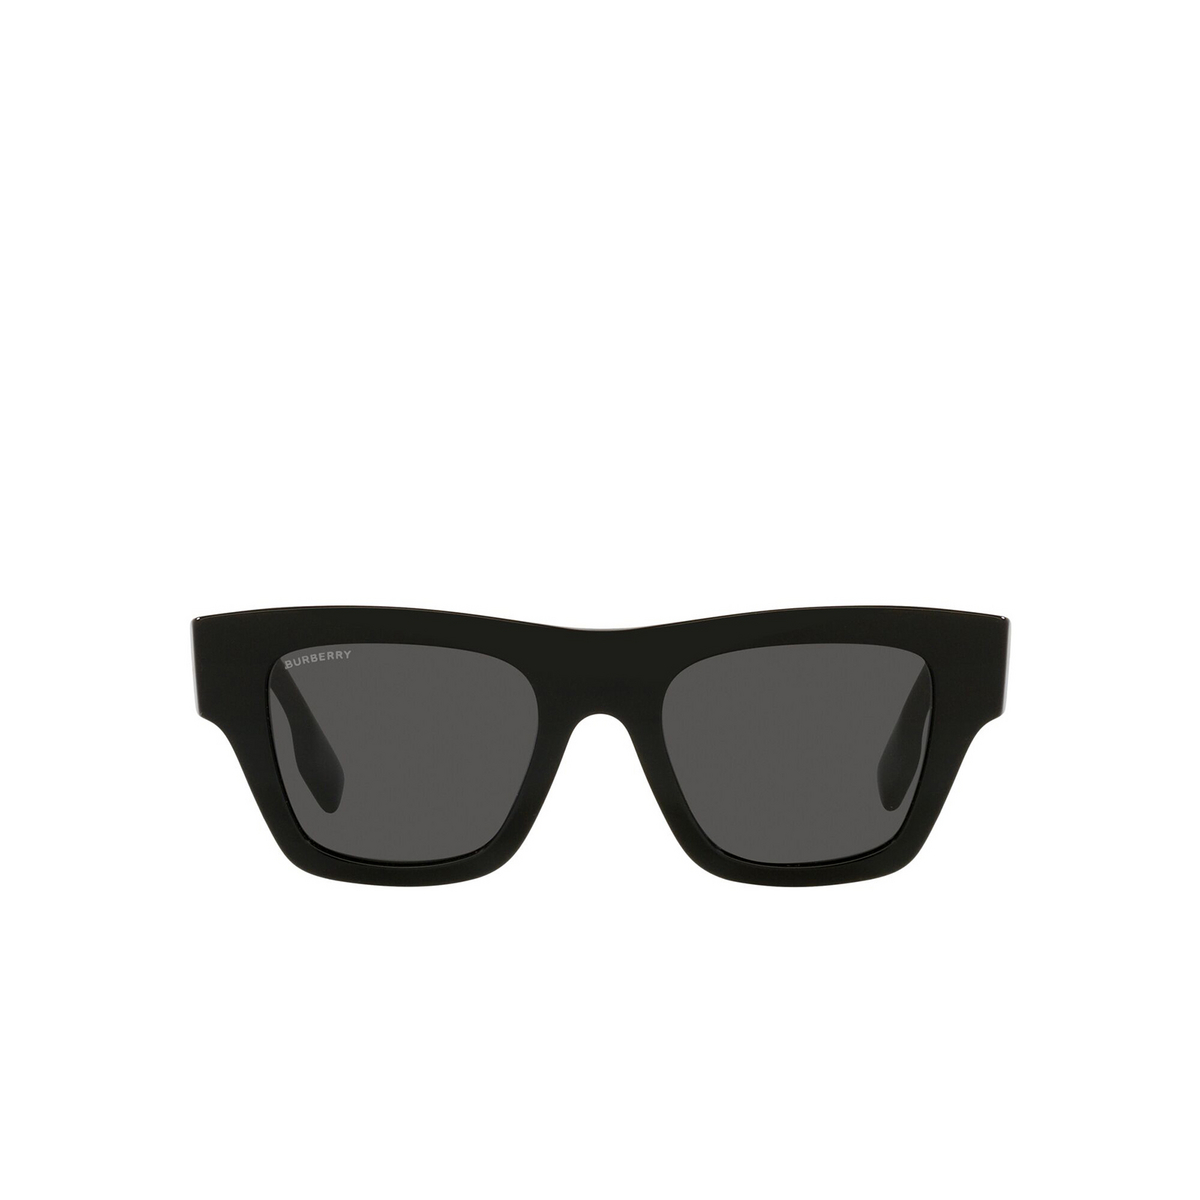 Burberry ERNEST Sunglasses 399387 Black - front view